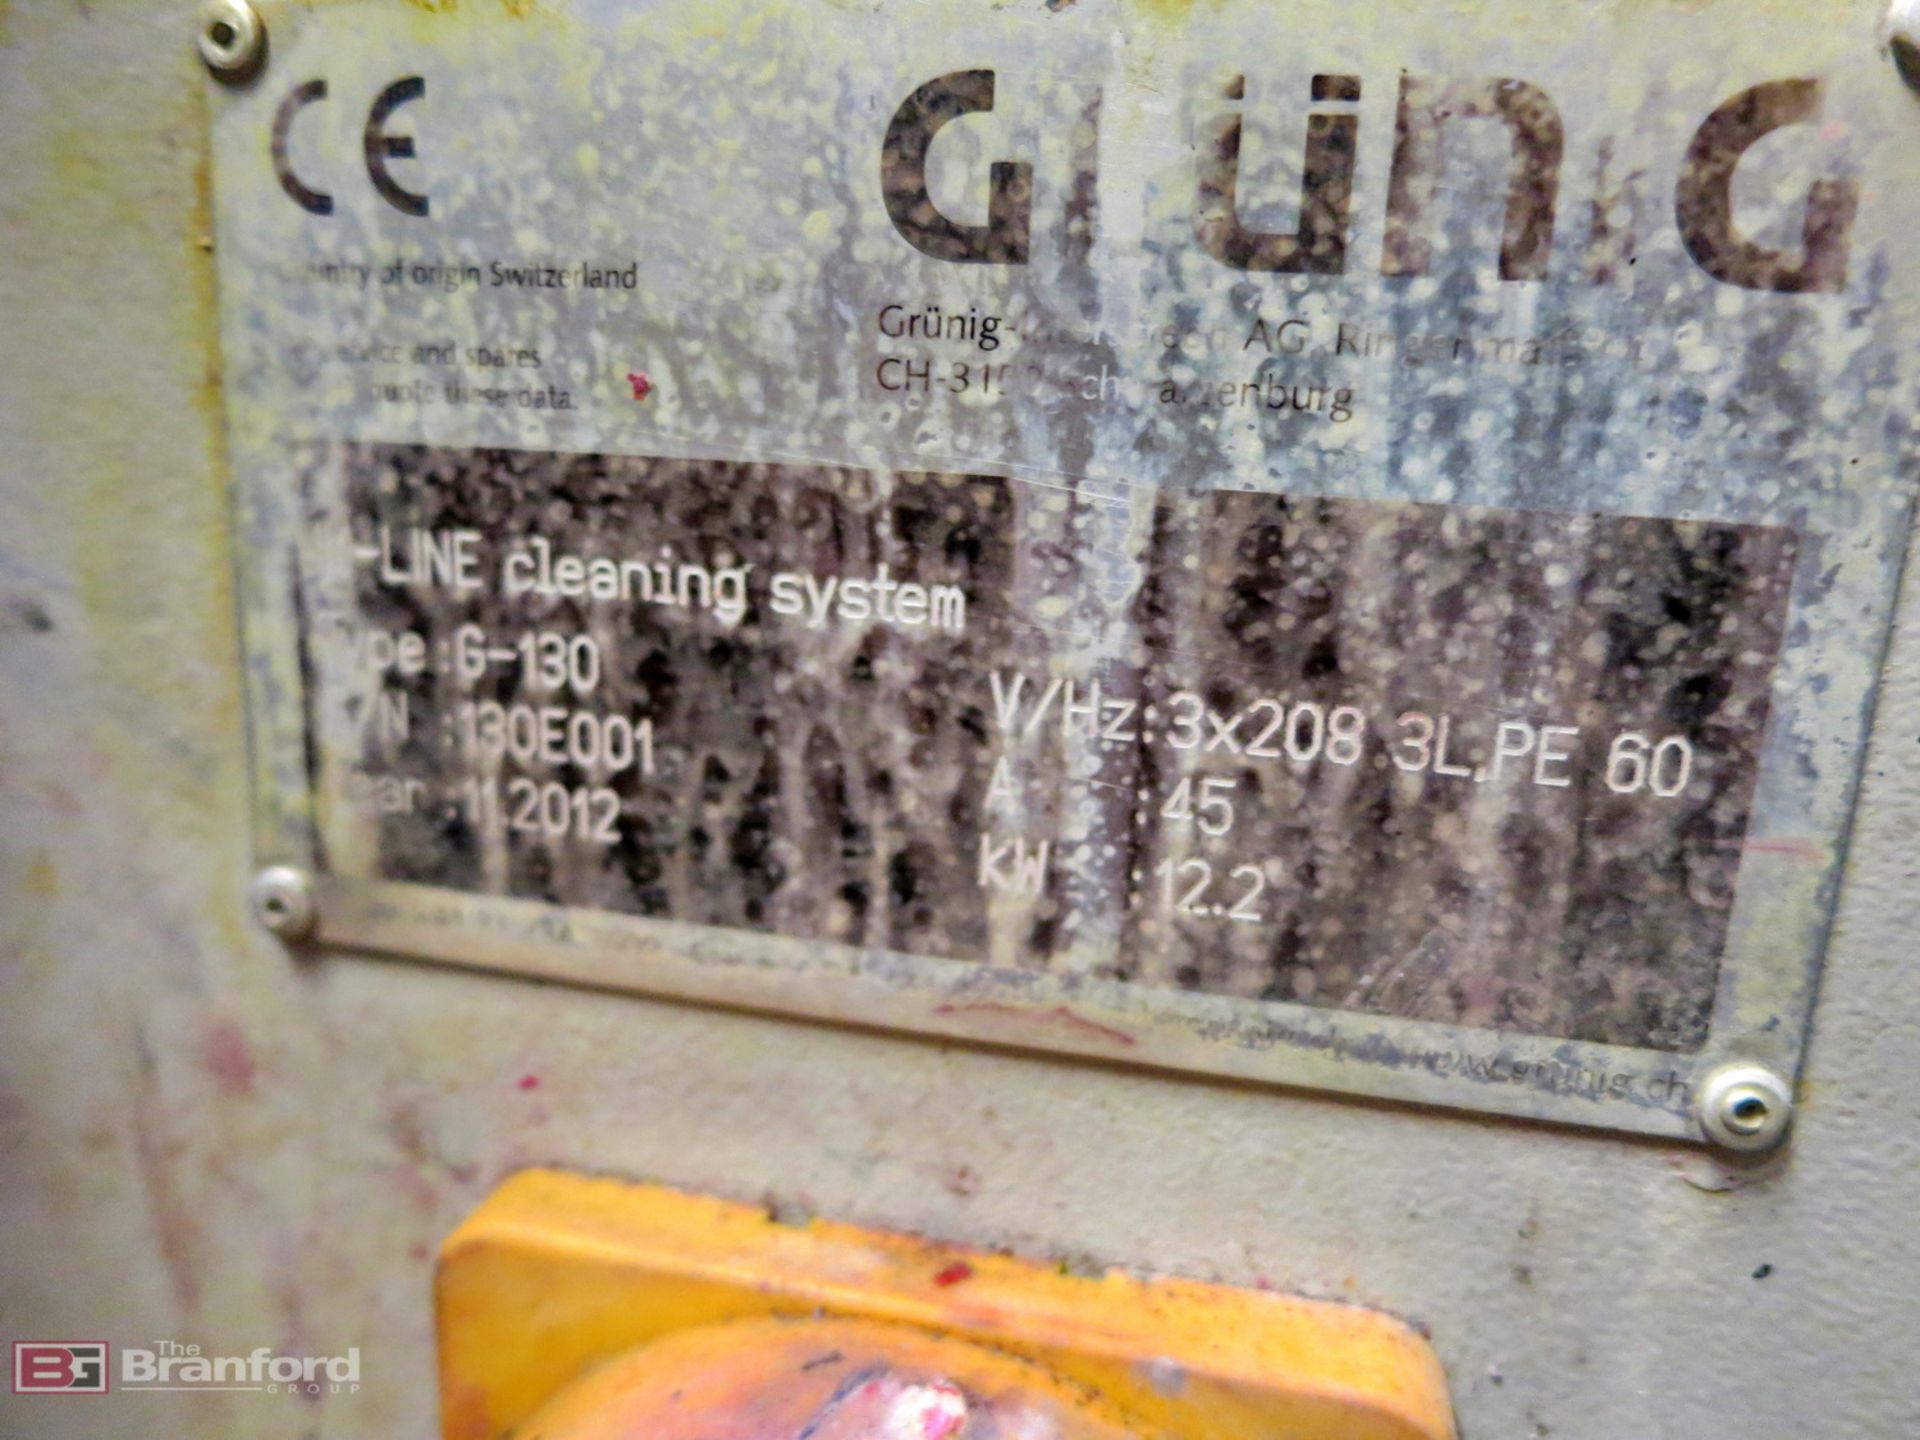 Gruenig Model G-130 inline screen wash and reclaim system - Image 9 of 11